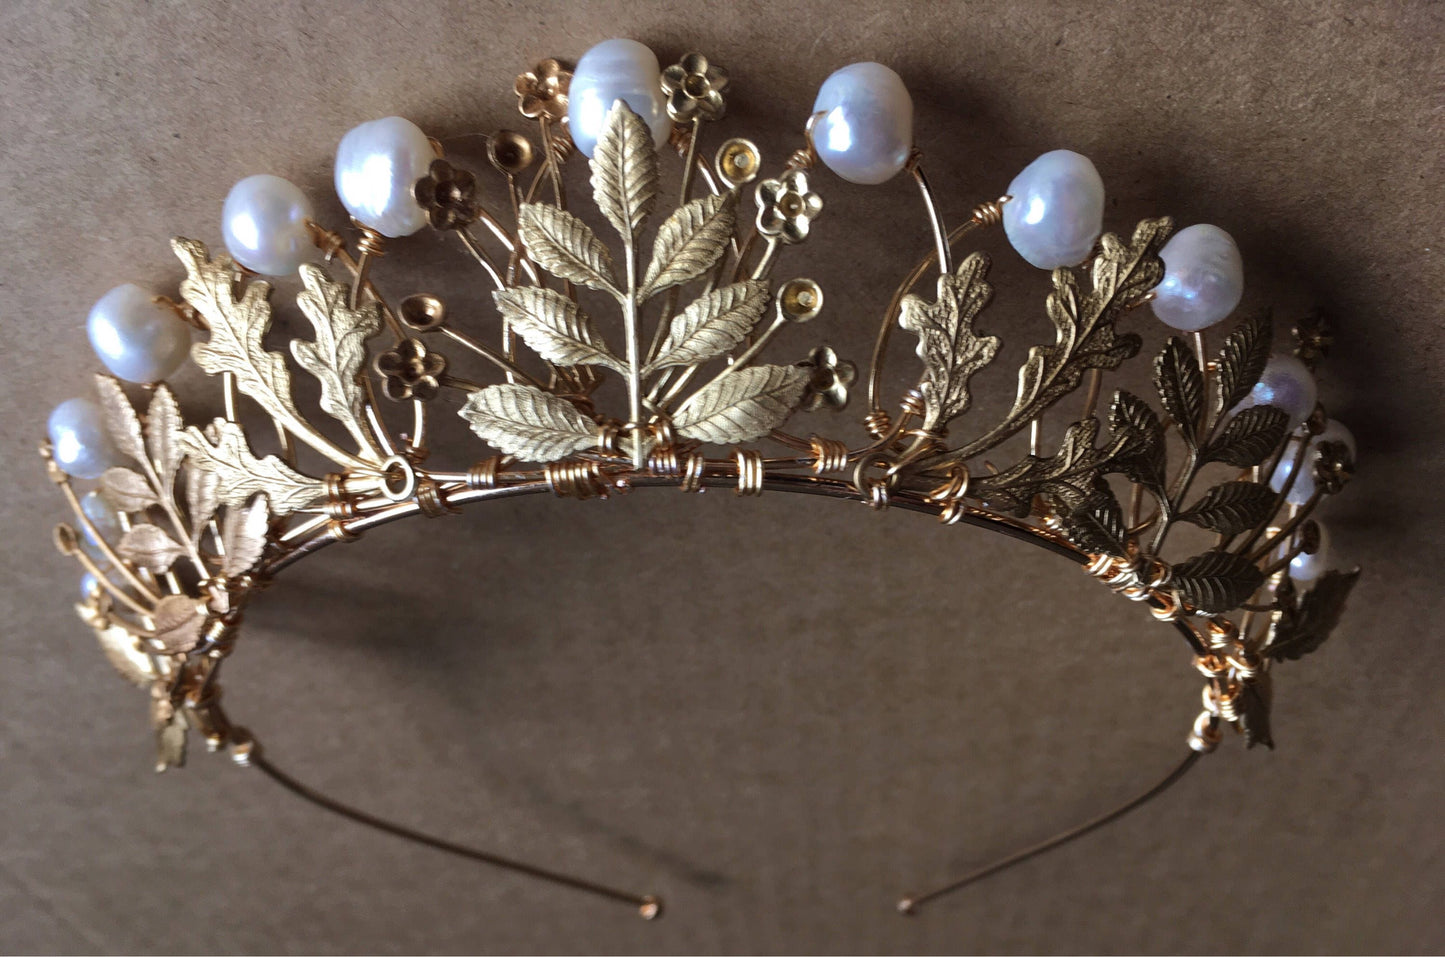 The AGATHA Leaf & Pearl Crown